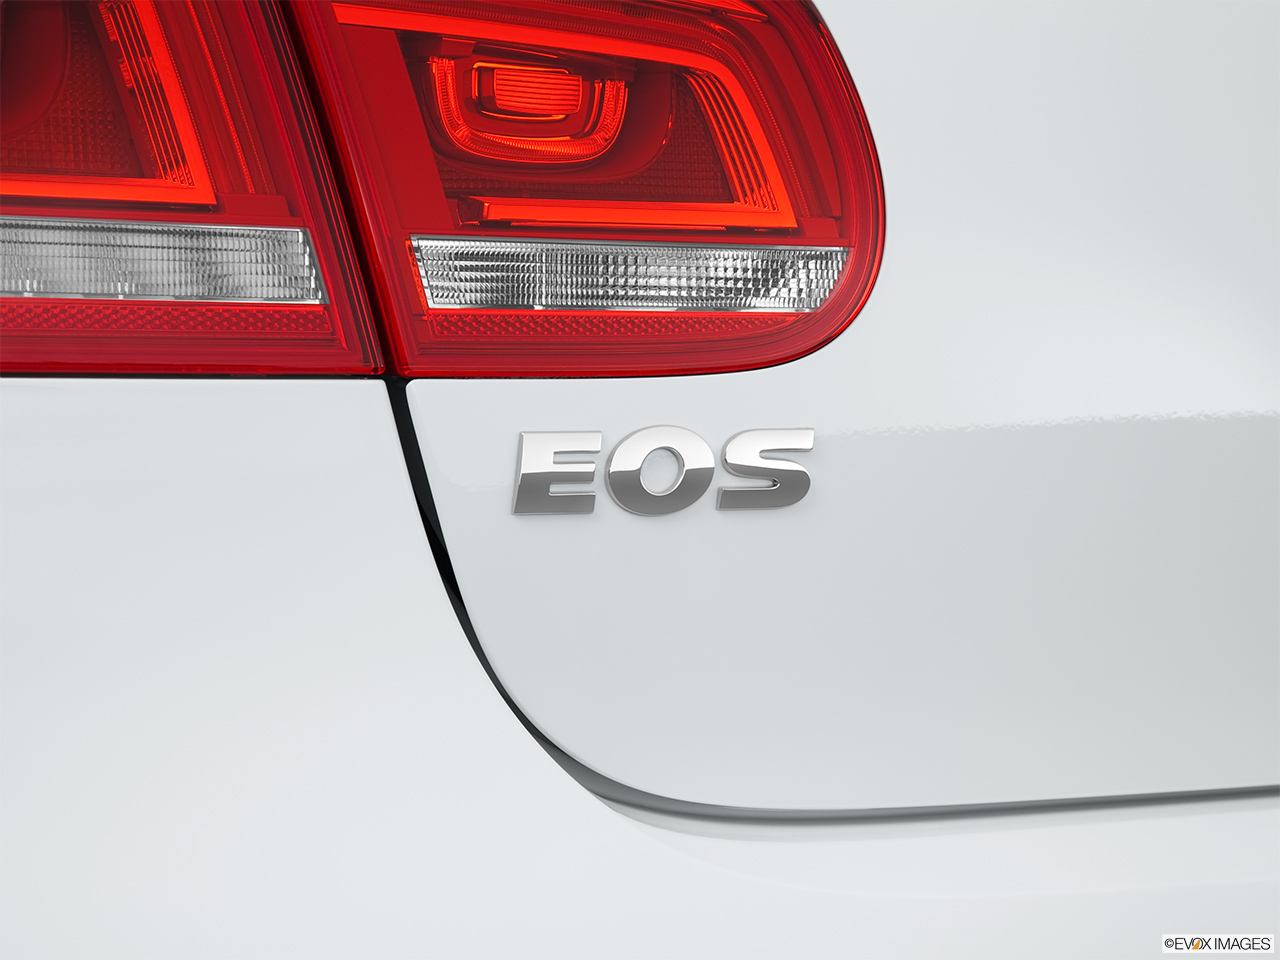 2013 Volkswagen Eos Lux Rear model badge/emblem 